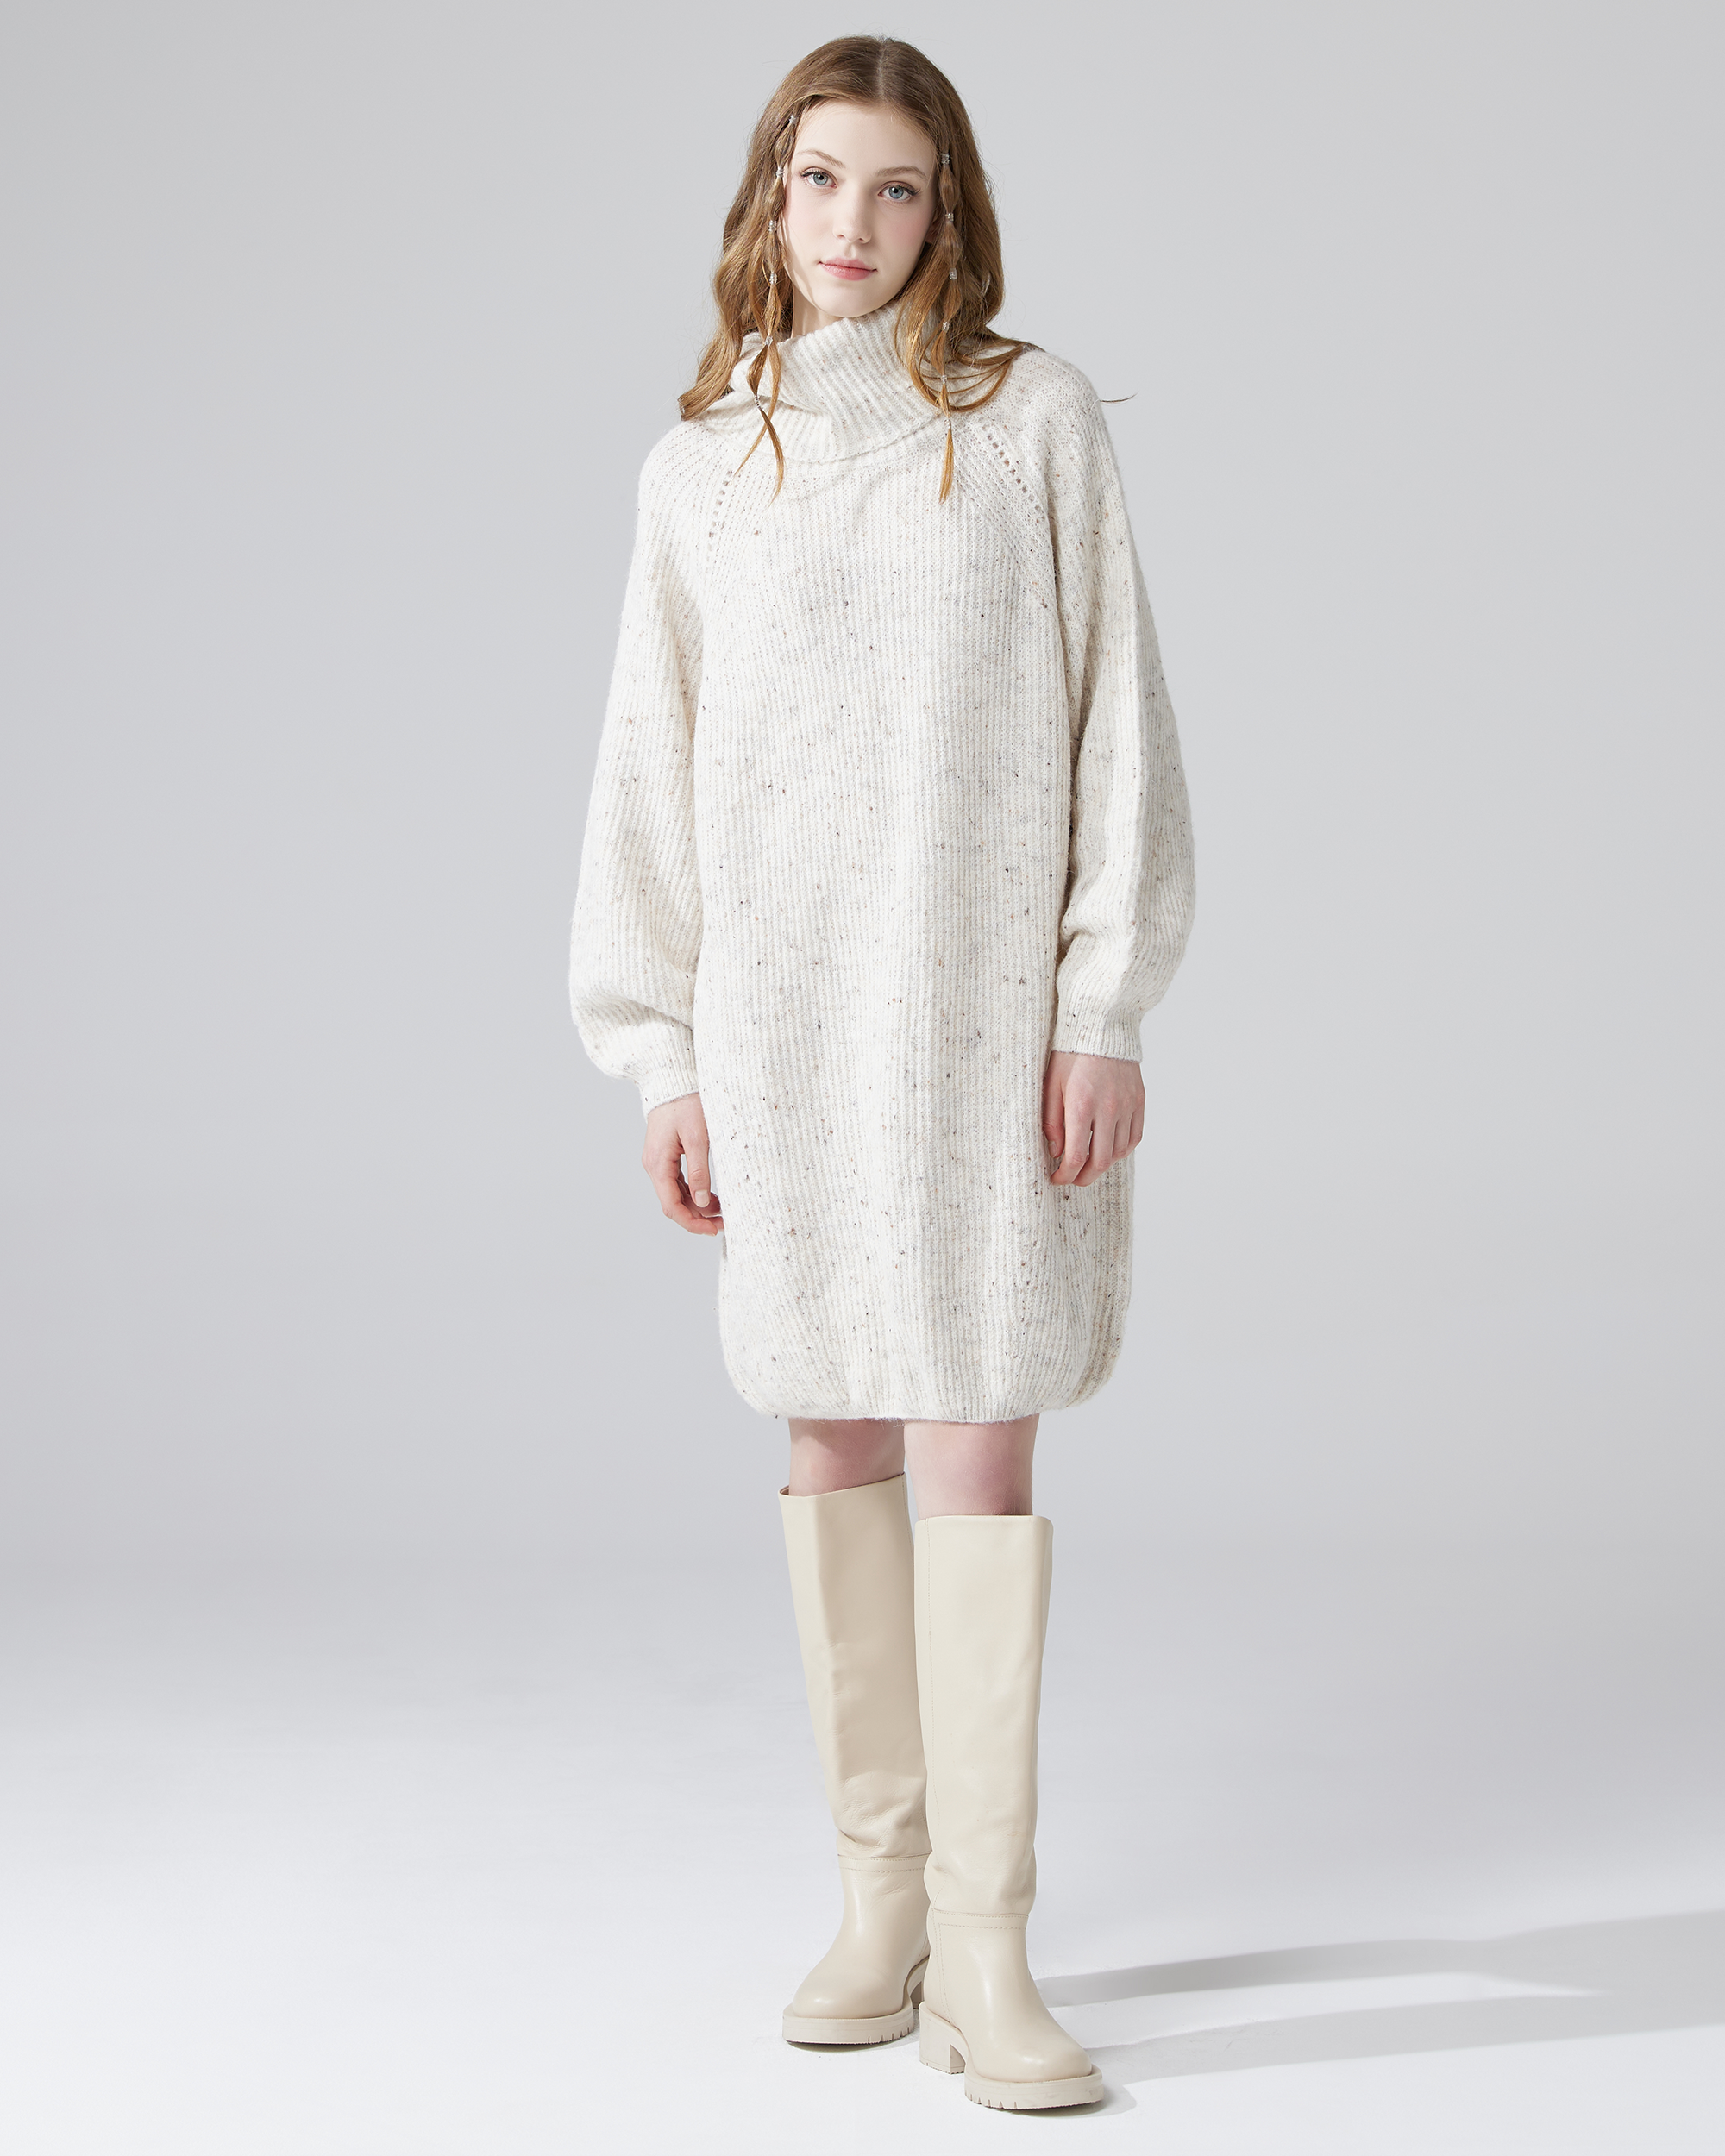 Turtleneck Balloon Sleeve Sweater Dress - Ivory/Cream